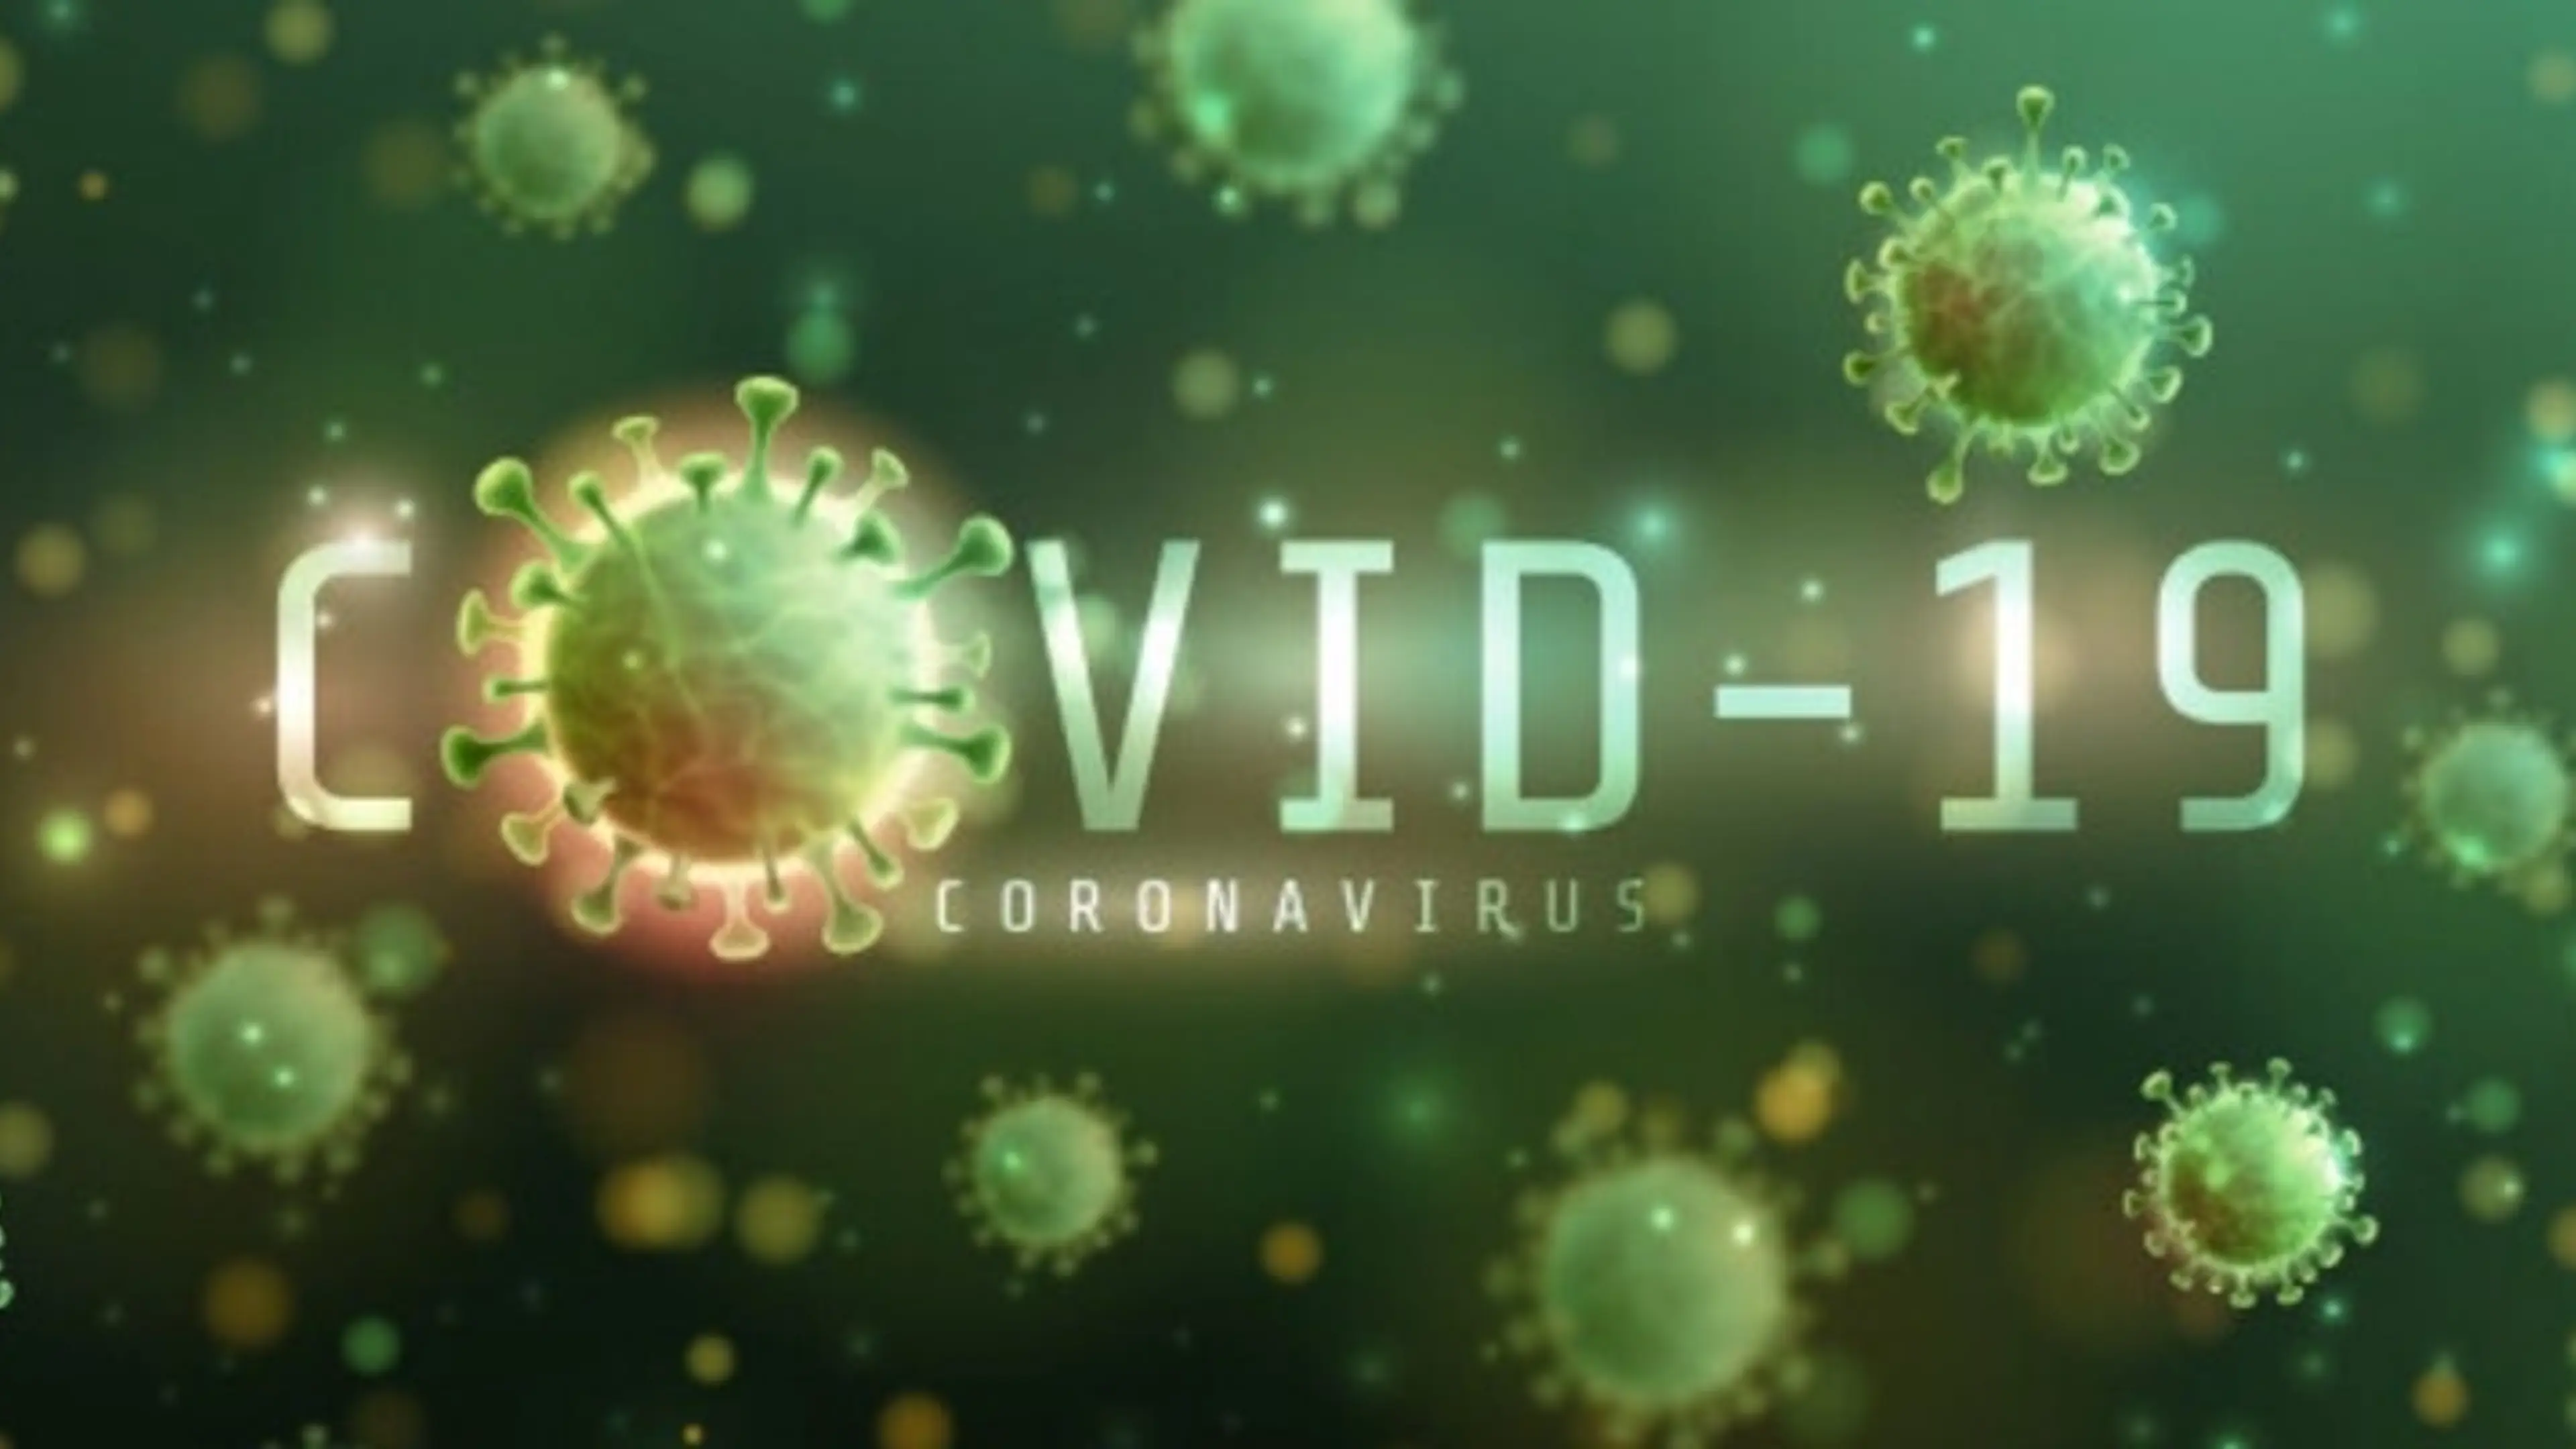 Coronavirus updates for April 22